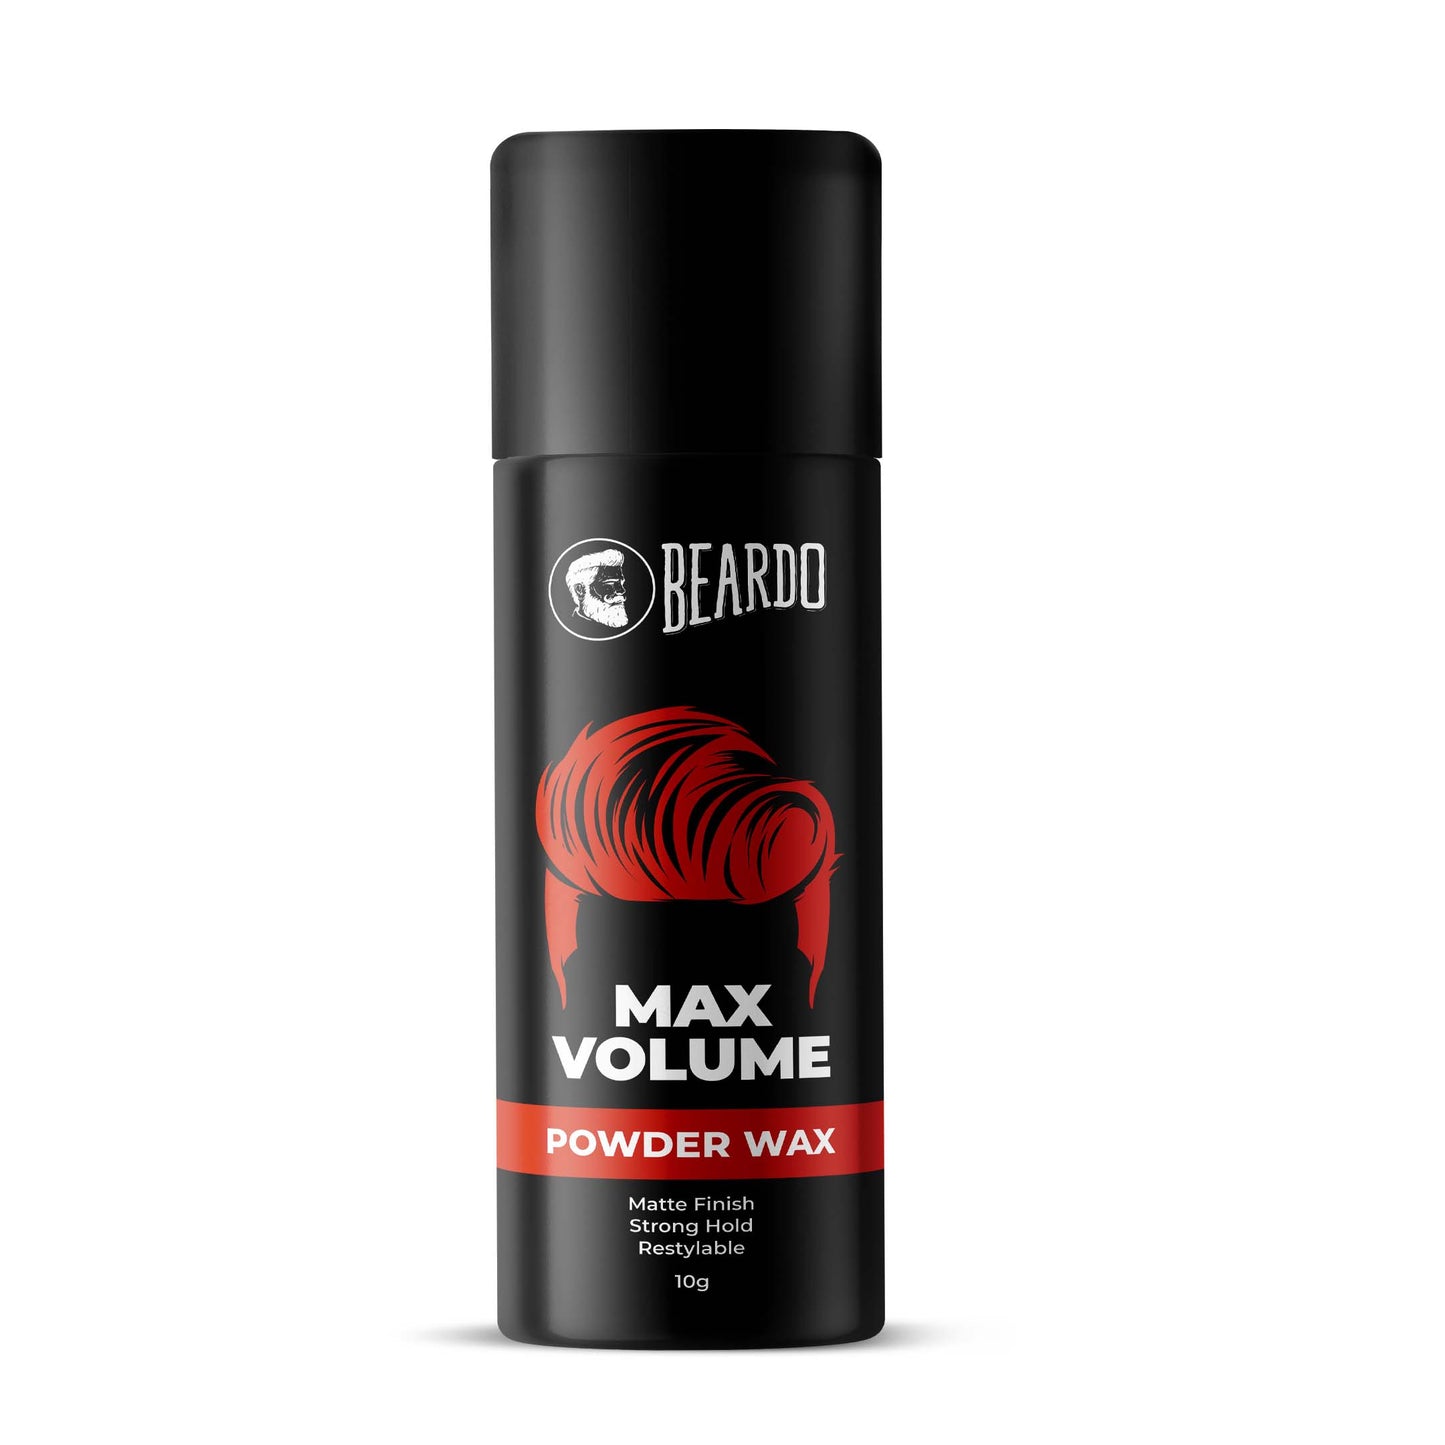 beardo max volume powder wax, beardo hair wax, powder wax for men, powder wax for hair, hair styling men, hair styles for men, powder wax